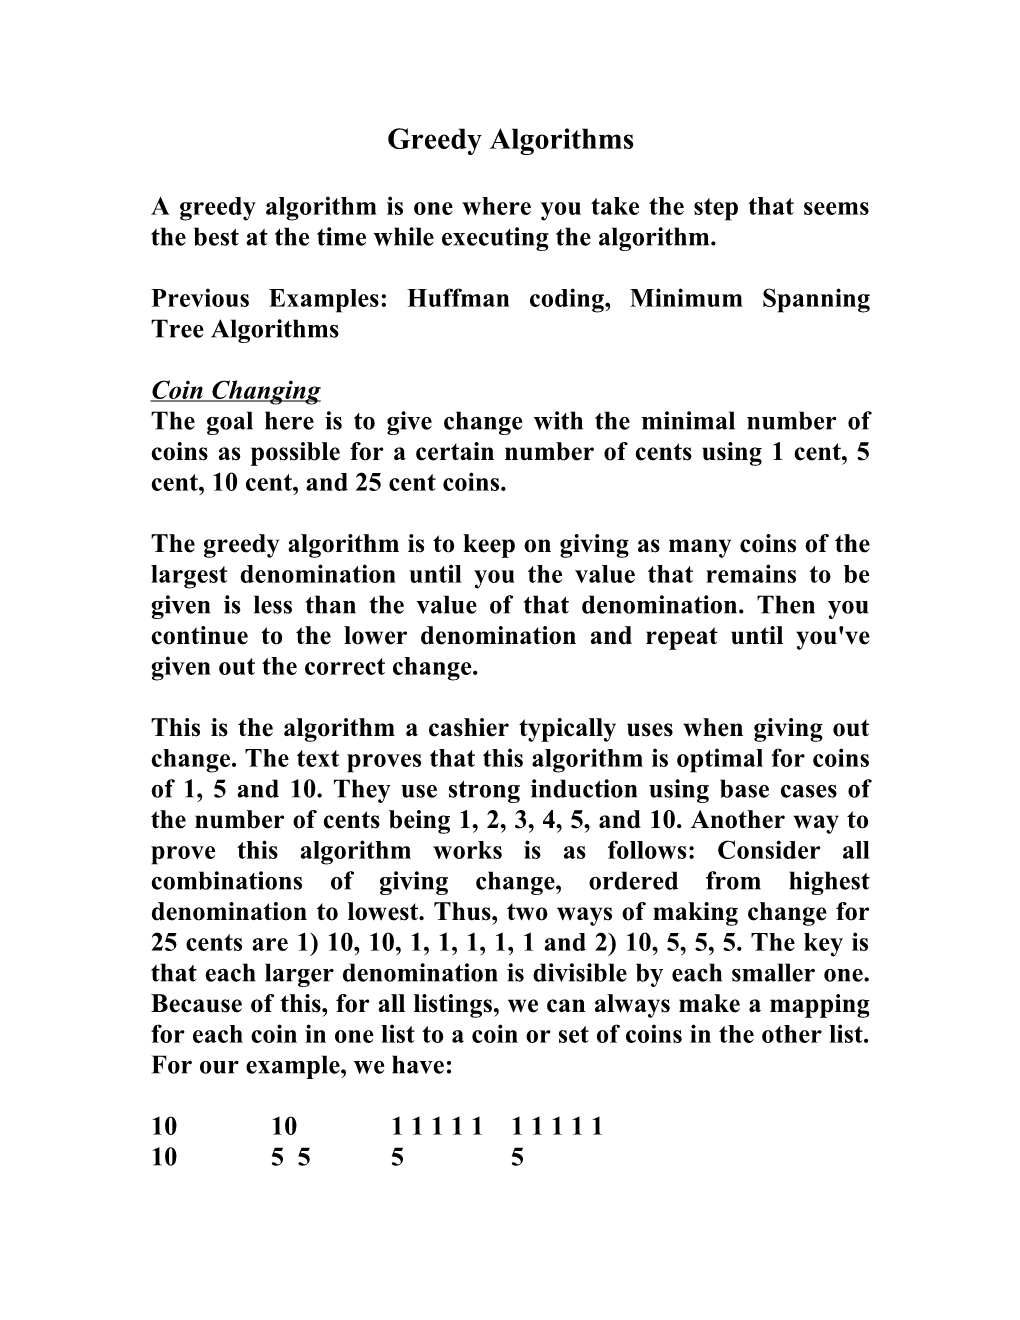 Previous Examples: Huffman Coding, Minimum Spanning Tree Algorithms